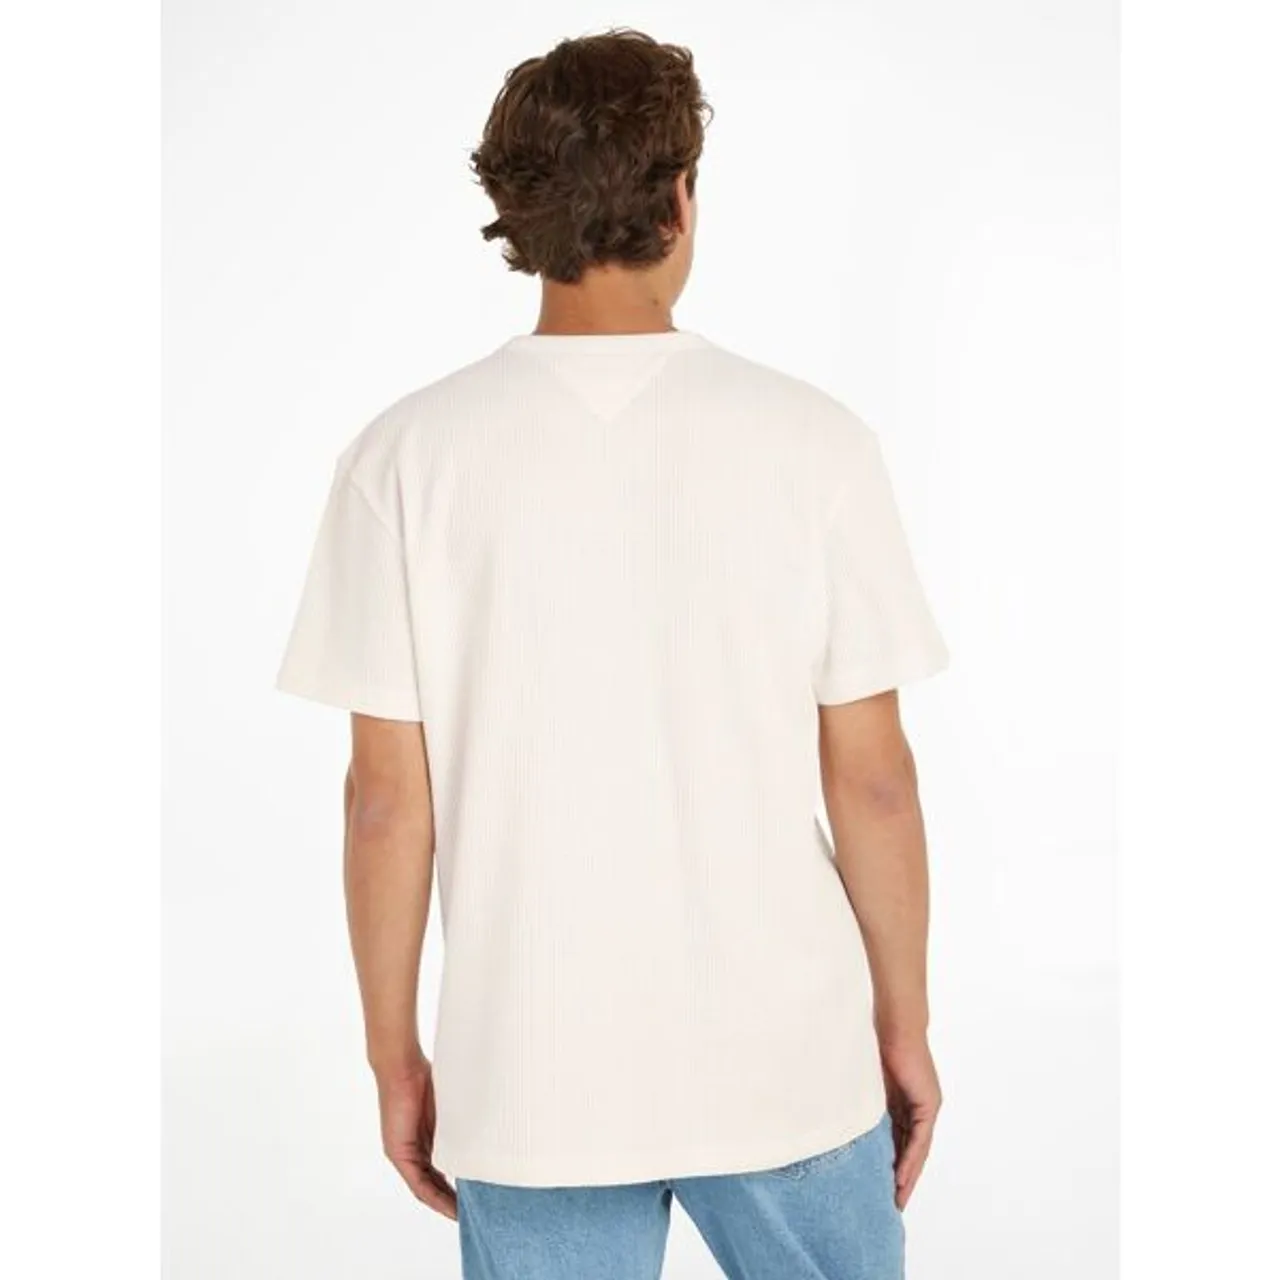 T-Shirt TOMMY JEANS "TJM REG WAFFLE S/S POCKET TEE" Gr. XL, weiß (ancient white) Herren Shirts T-Shirts